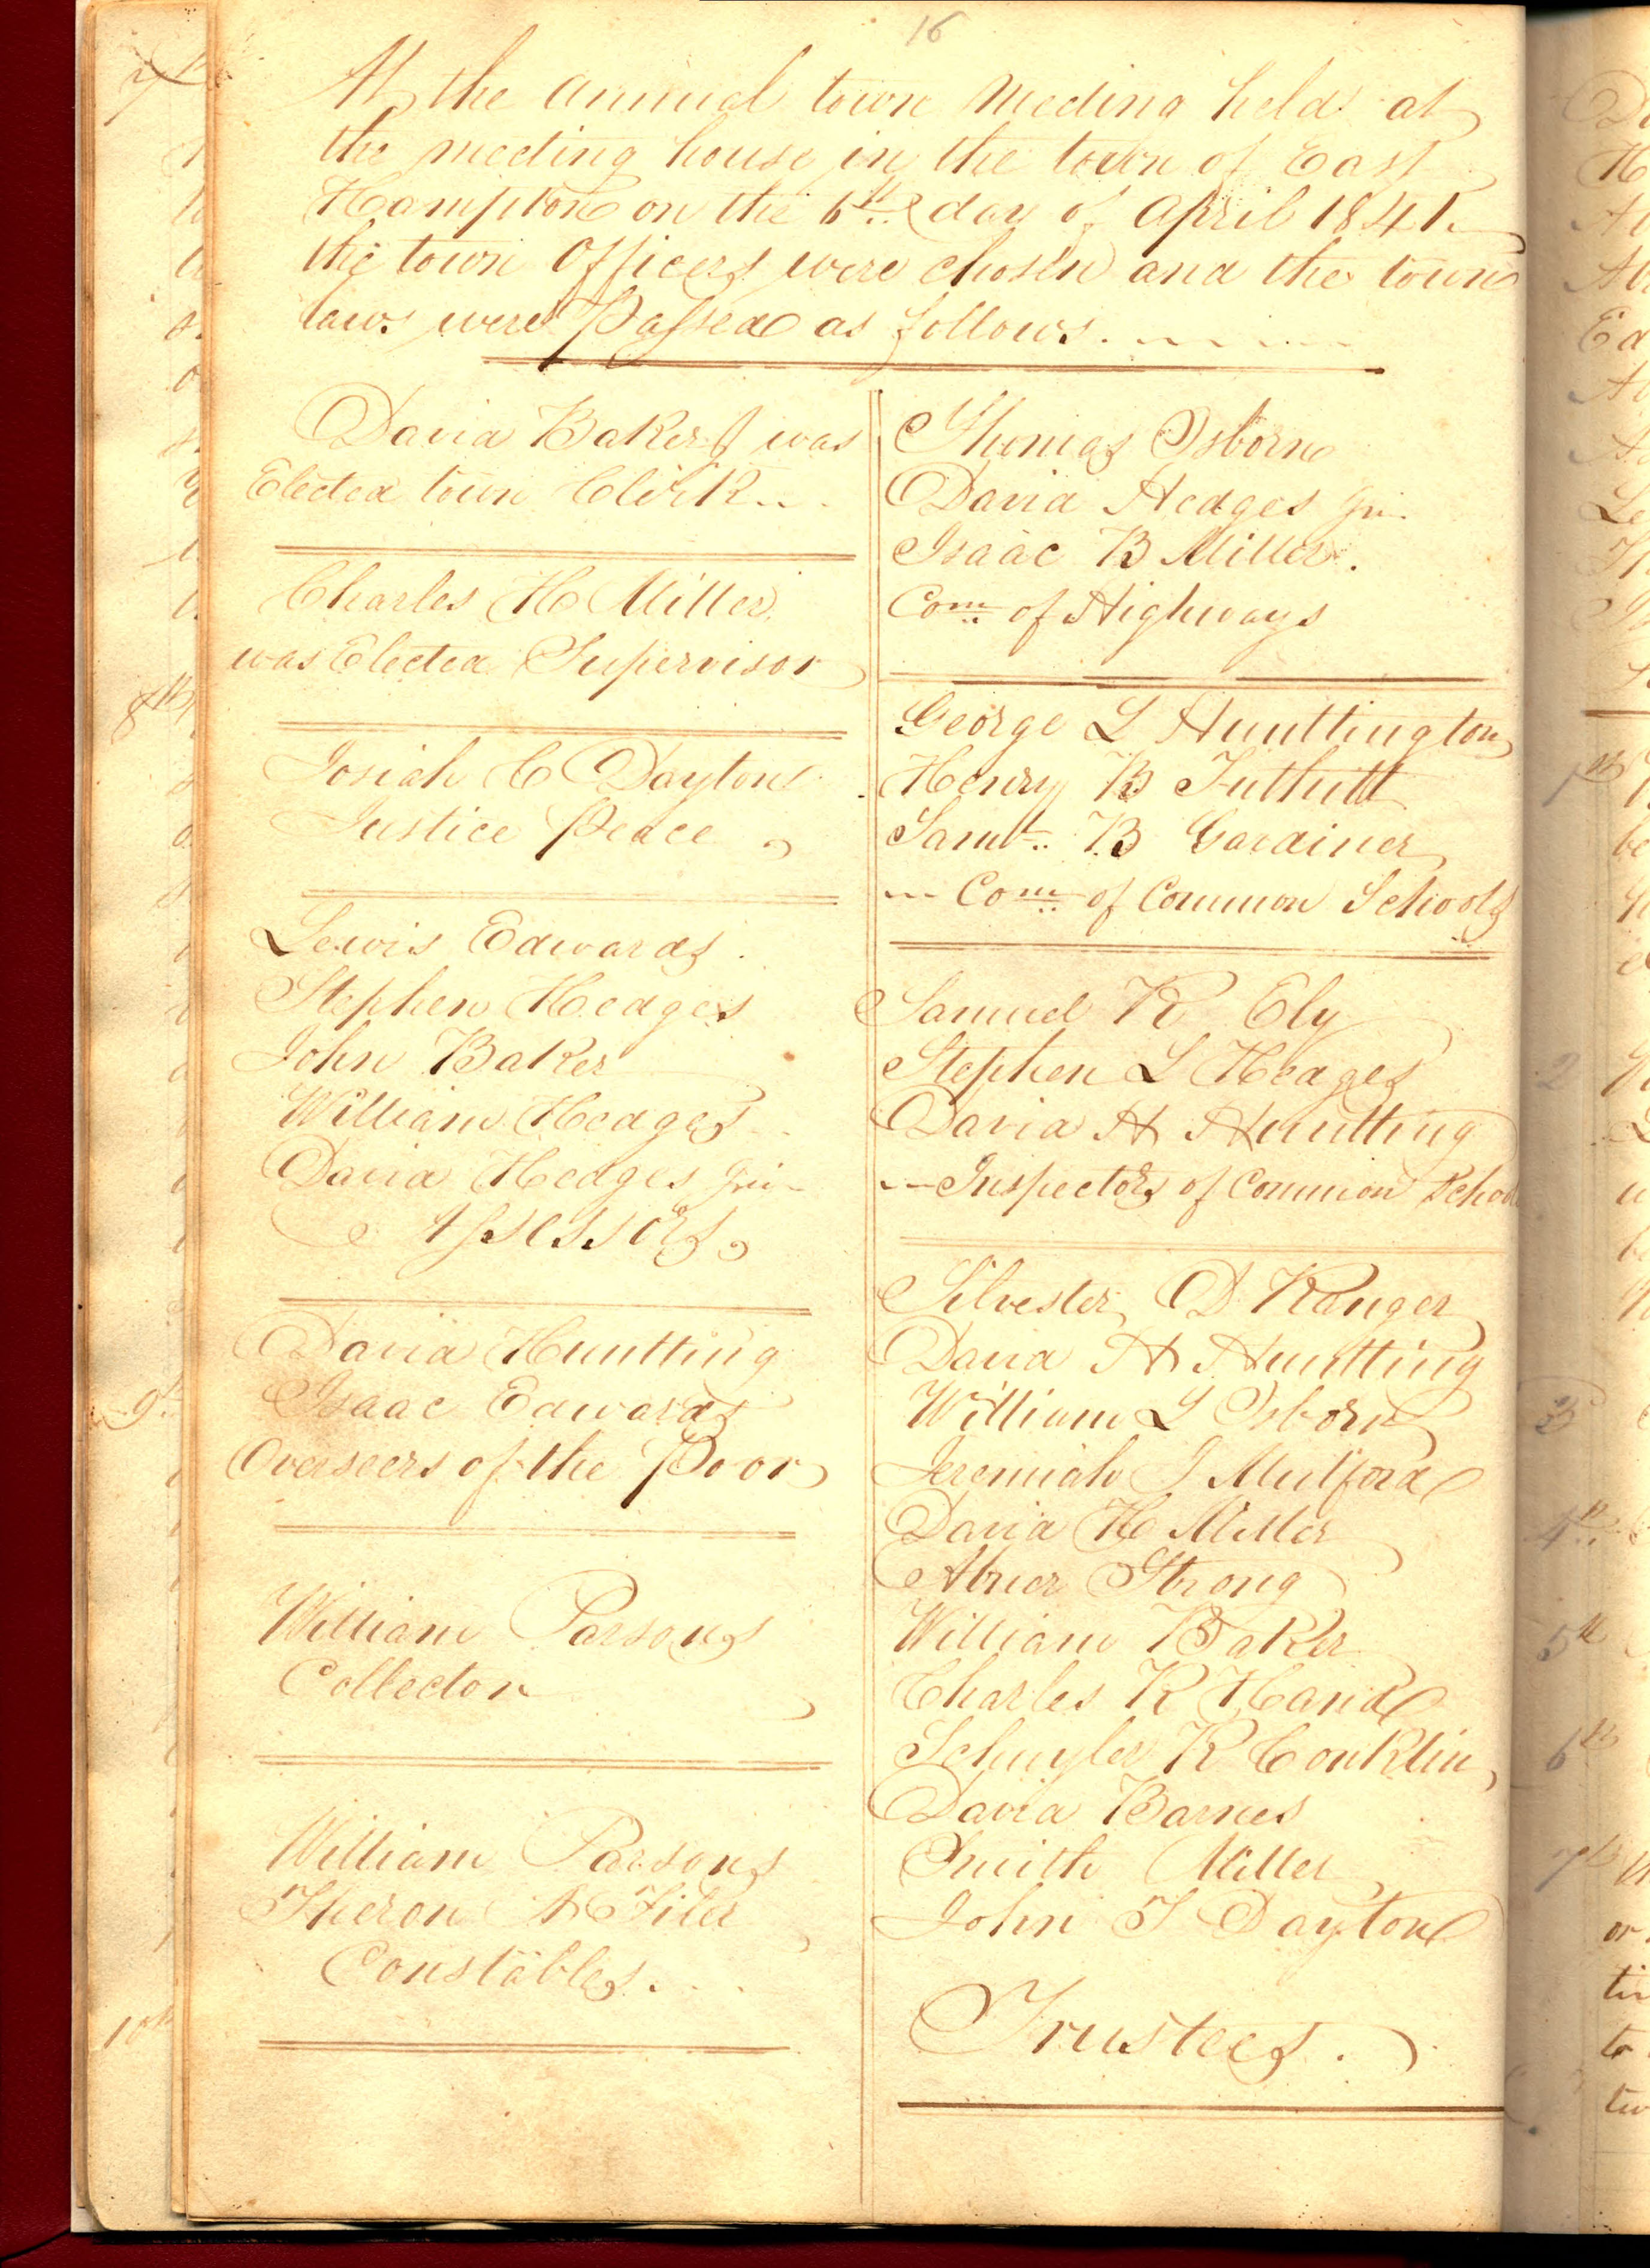 East Hampton Town Records, Volume K, 18351899